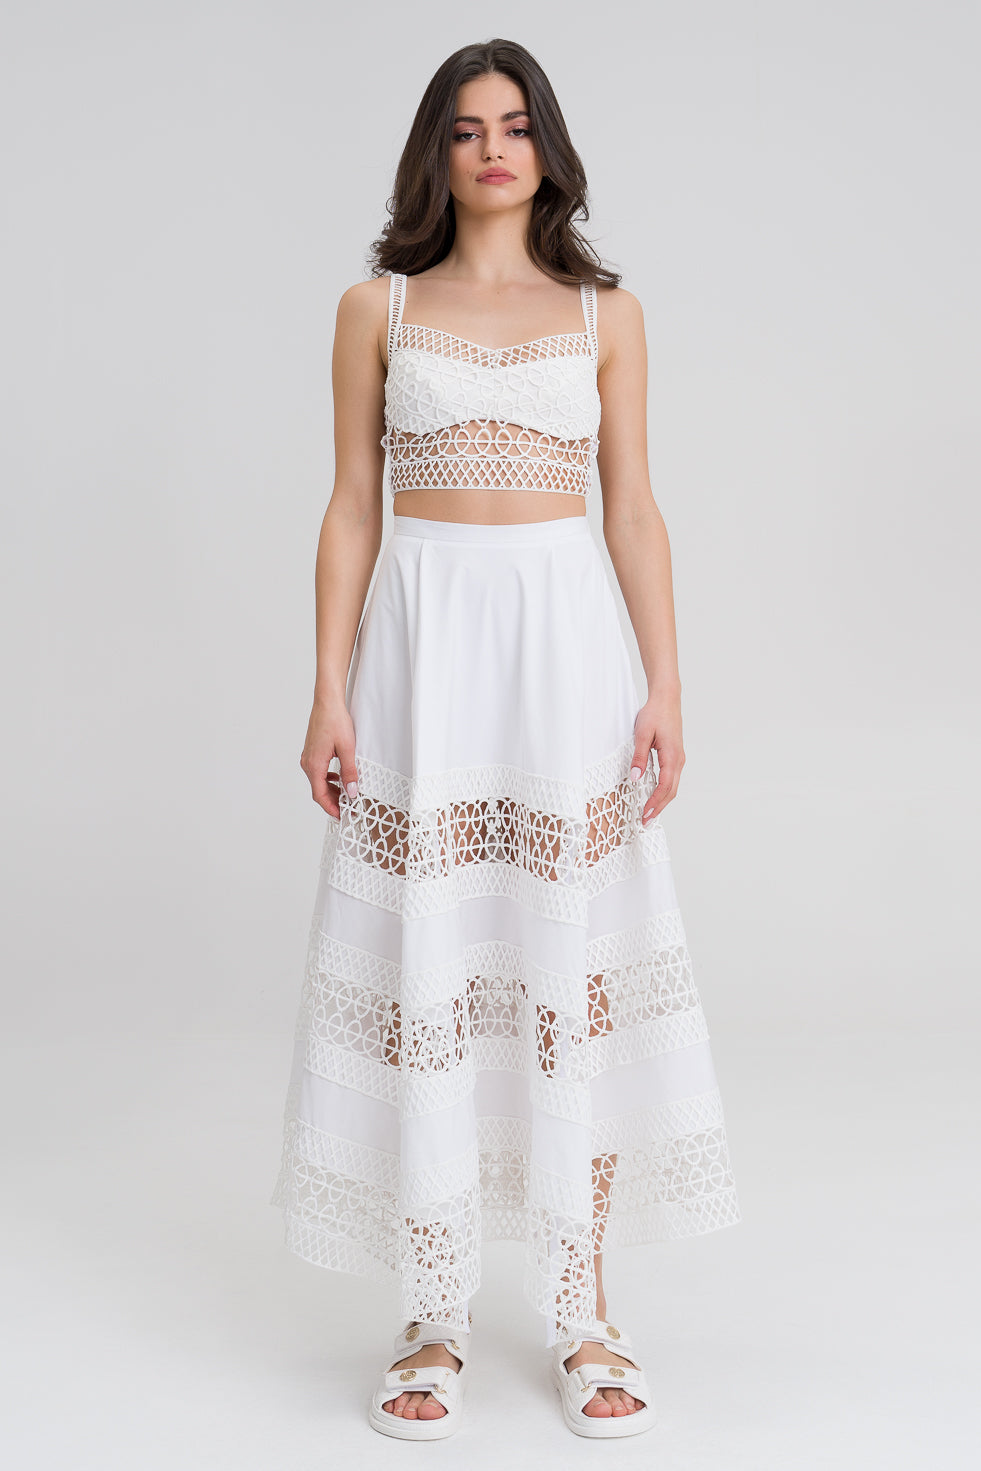 Nora White Cotton Blend embroided maxi skirt